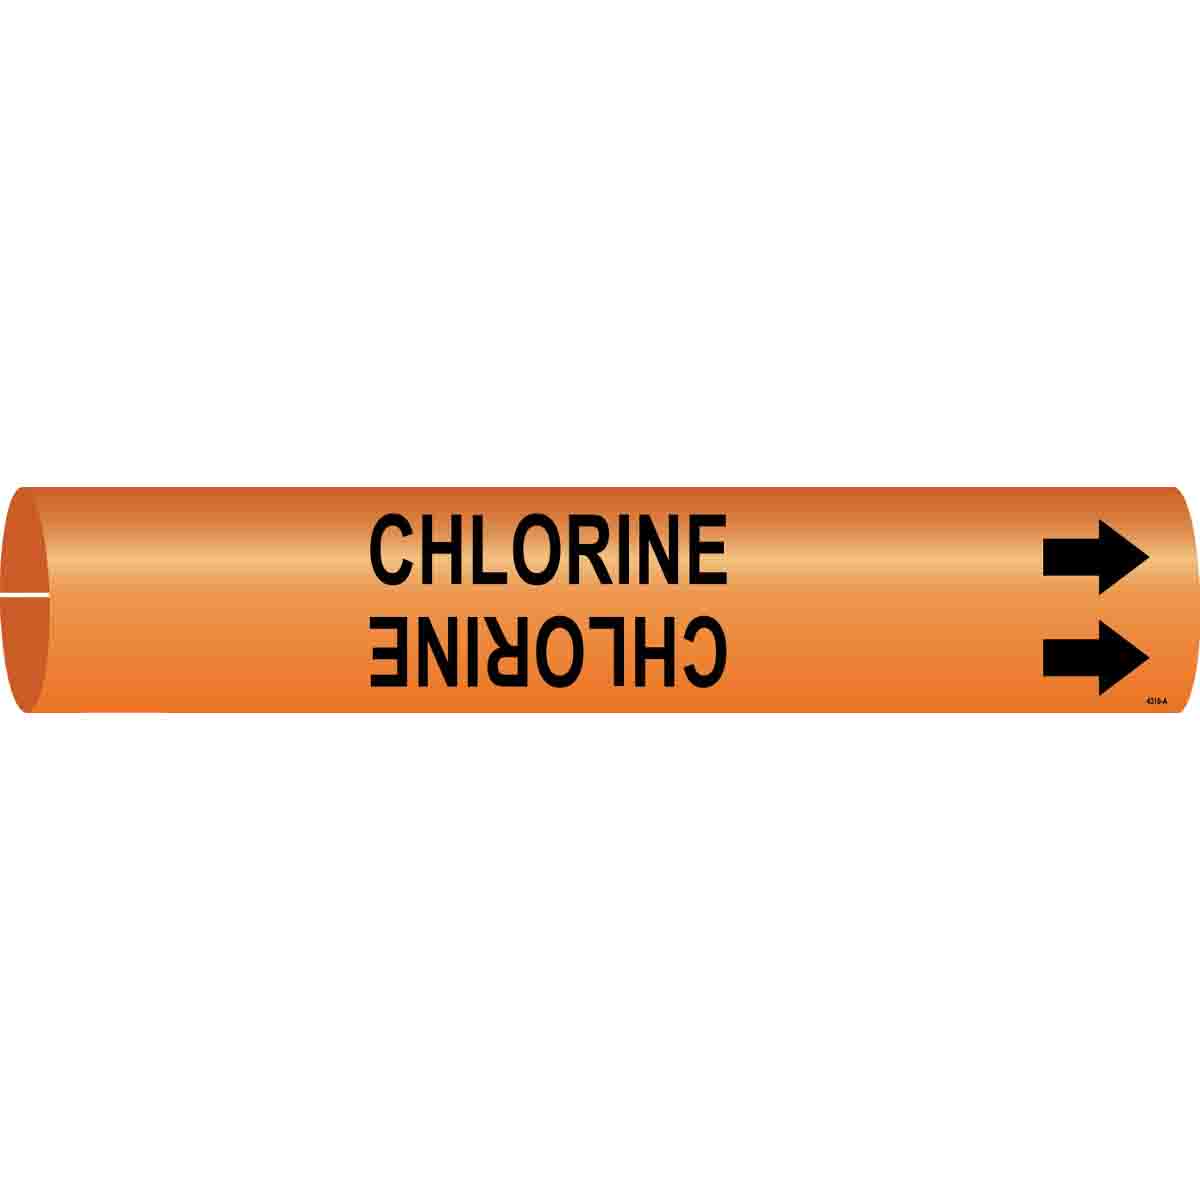 Strap-On Pipe Marker Legend Chlorine Brady 4310-G Black on Orange